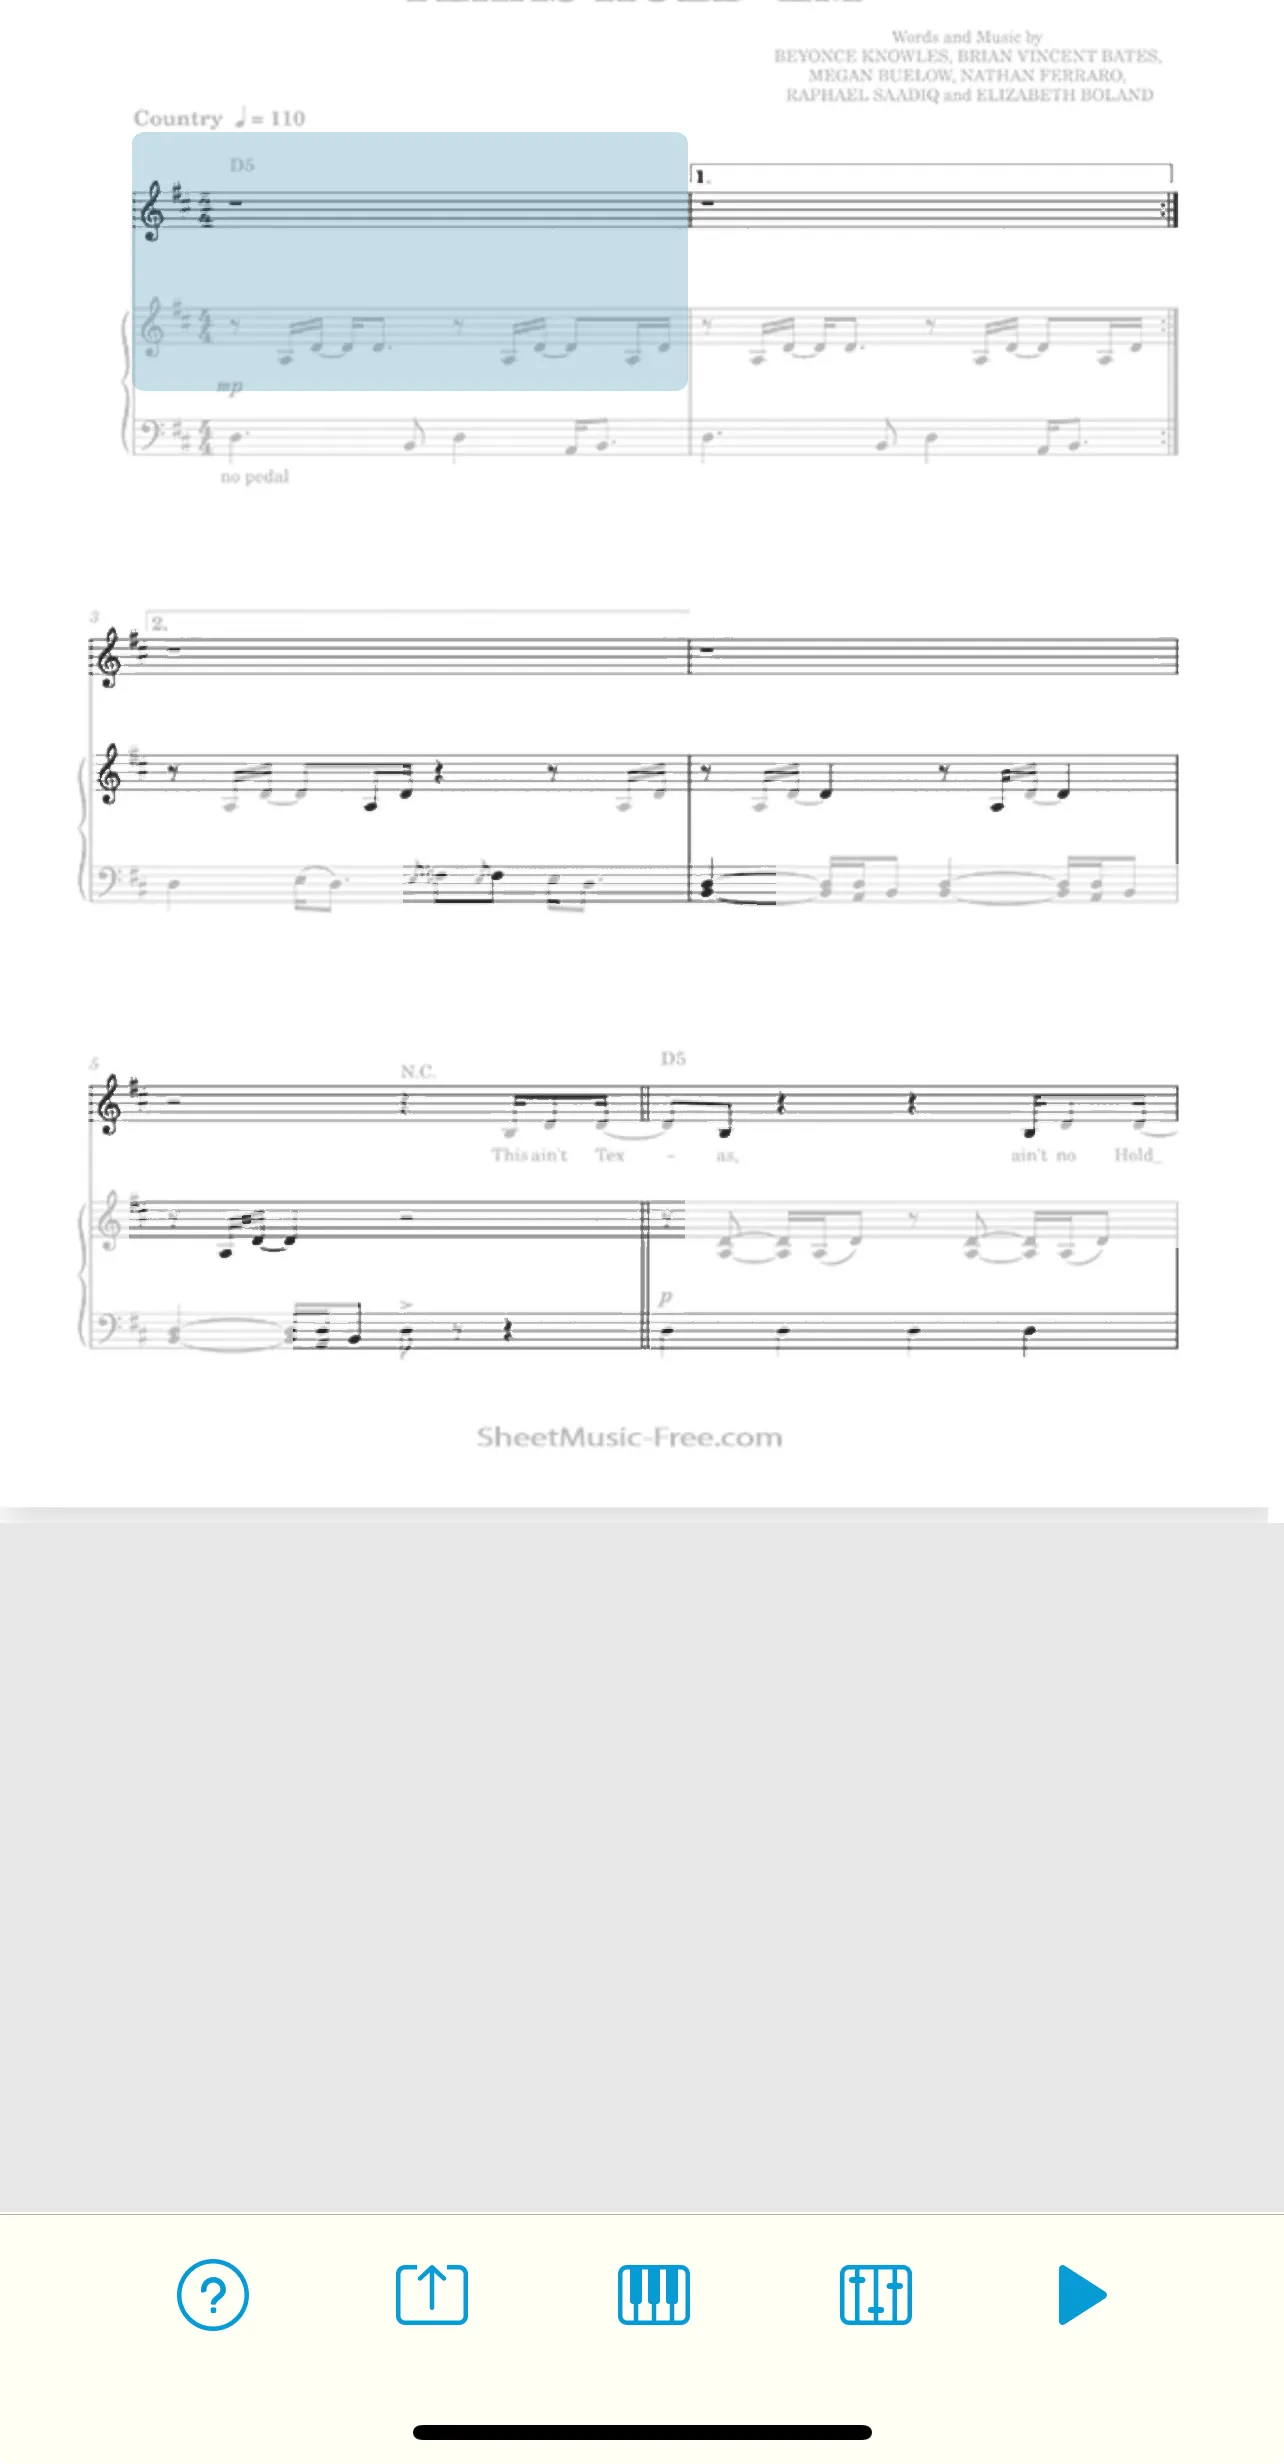 play sheet music from pdf sheet music scanner